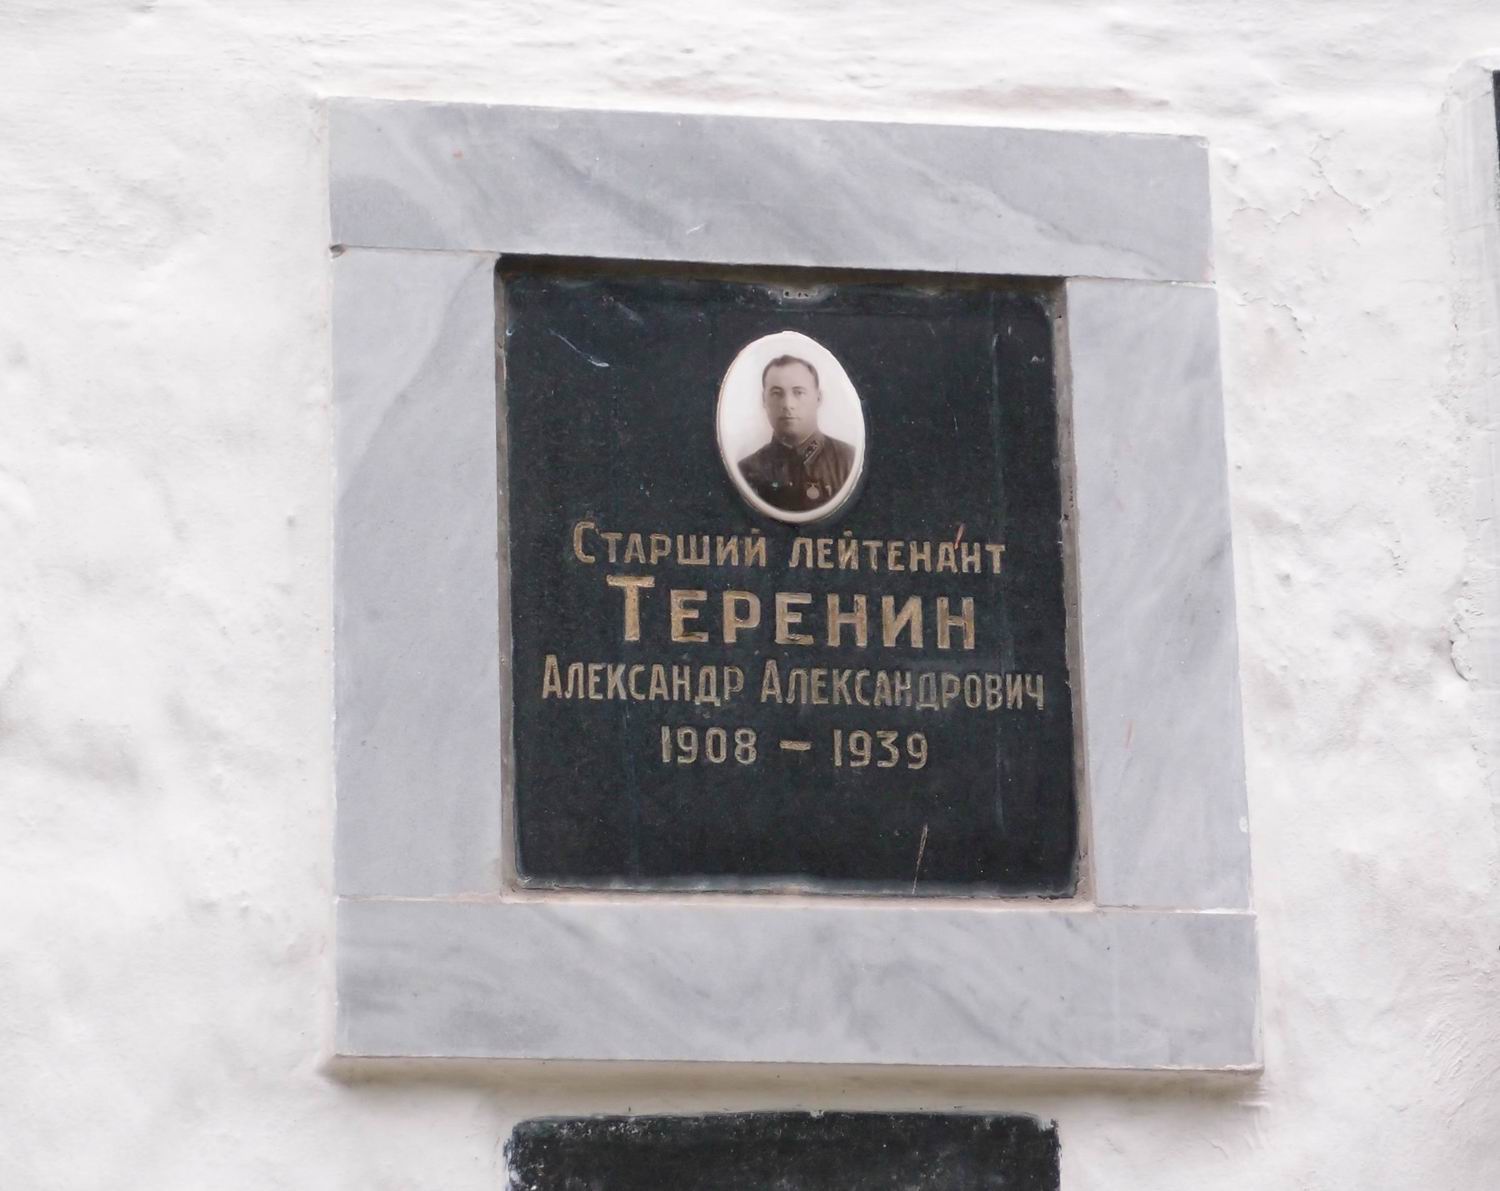 Плита на нише Теренина А.А. (1908-1939), на Новодевичьем кладбище (колумбарий [5]-19-1).